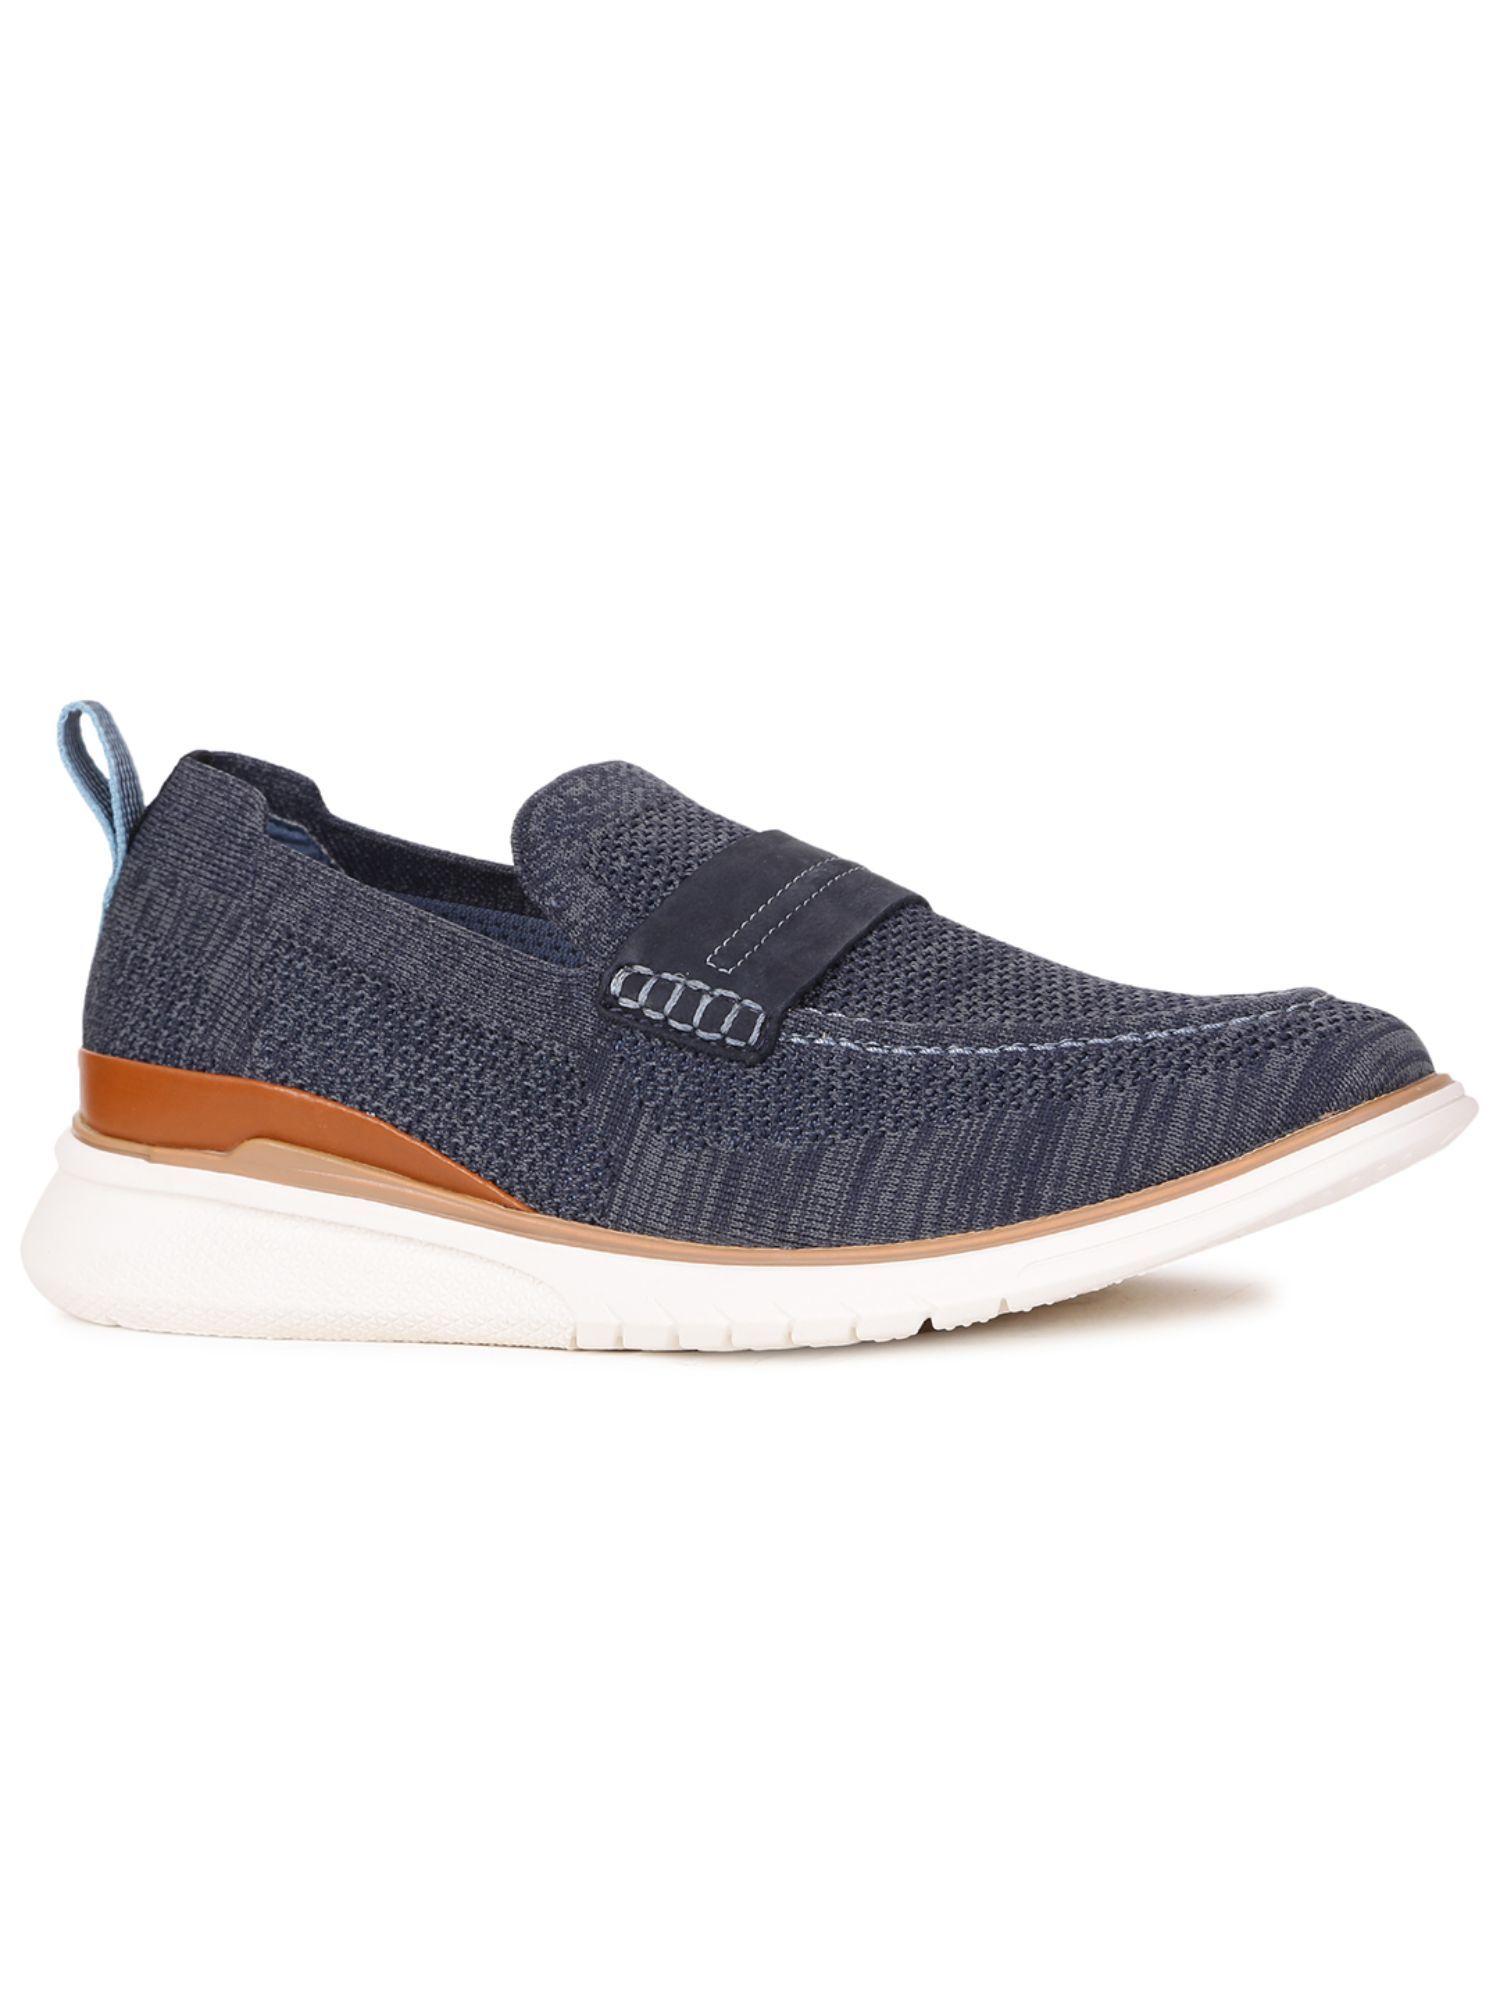 mens-navy-blue-slip-on-running-shoes